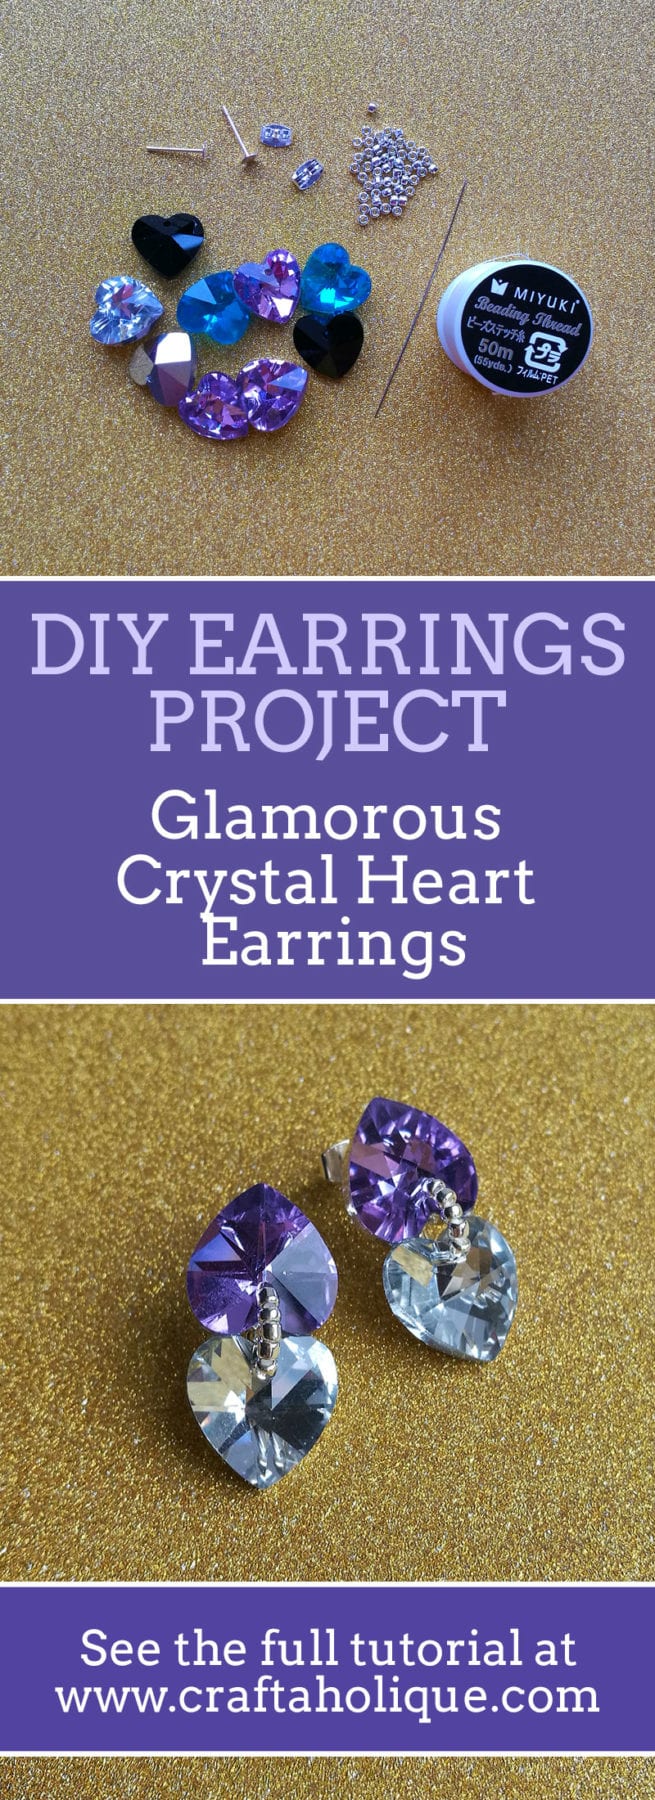 Glamorous Crystal Heart Earrings - Easy Jewellery Making Project